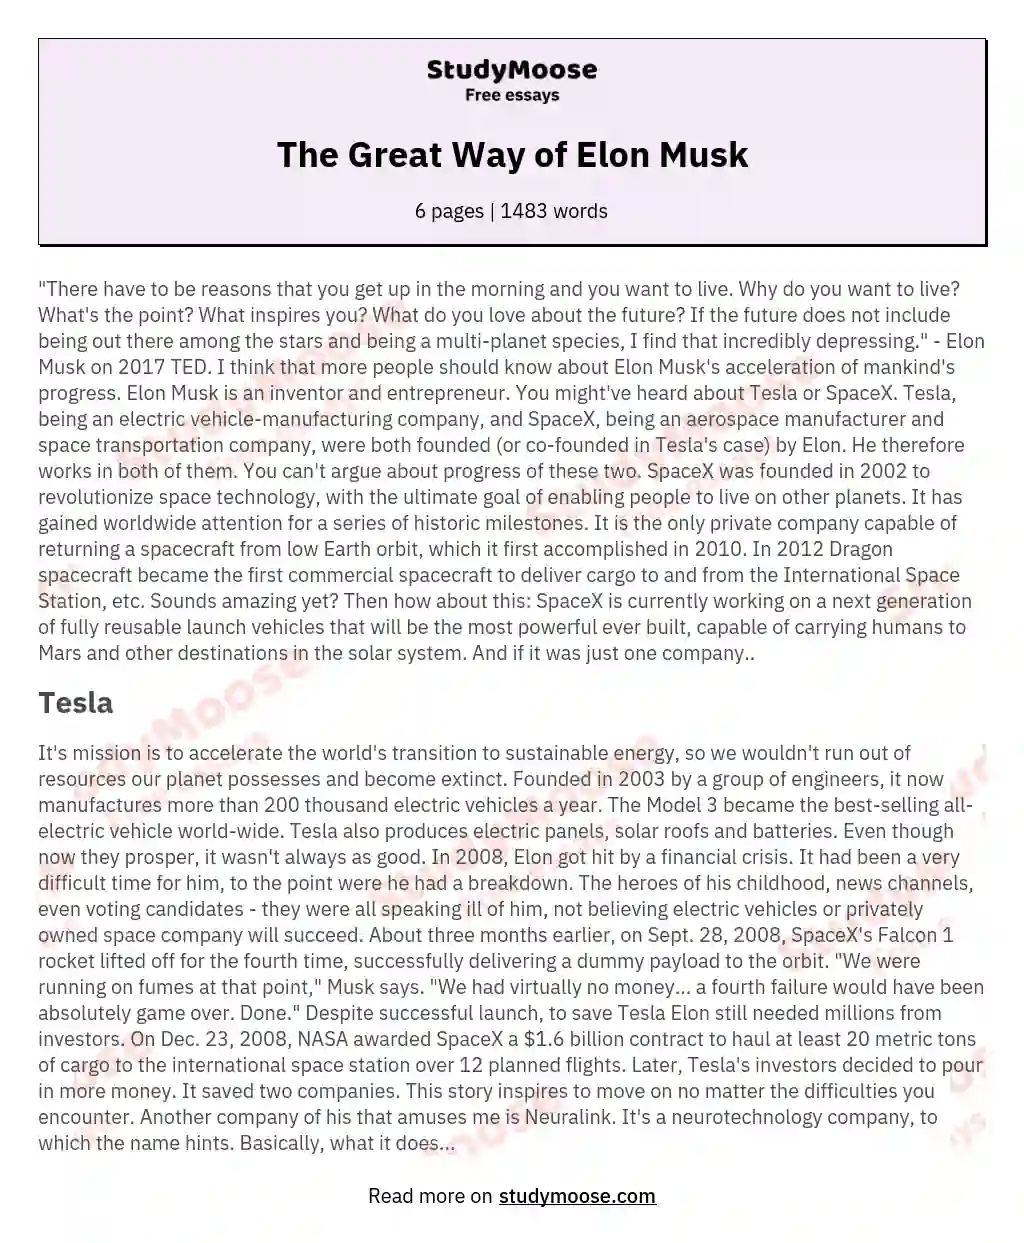 The Great Way of Elon Musk essay